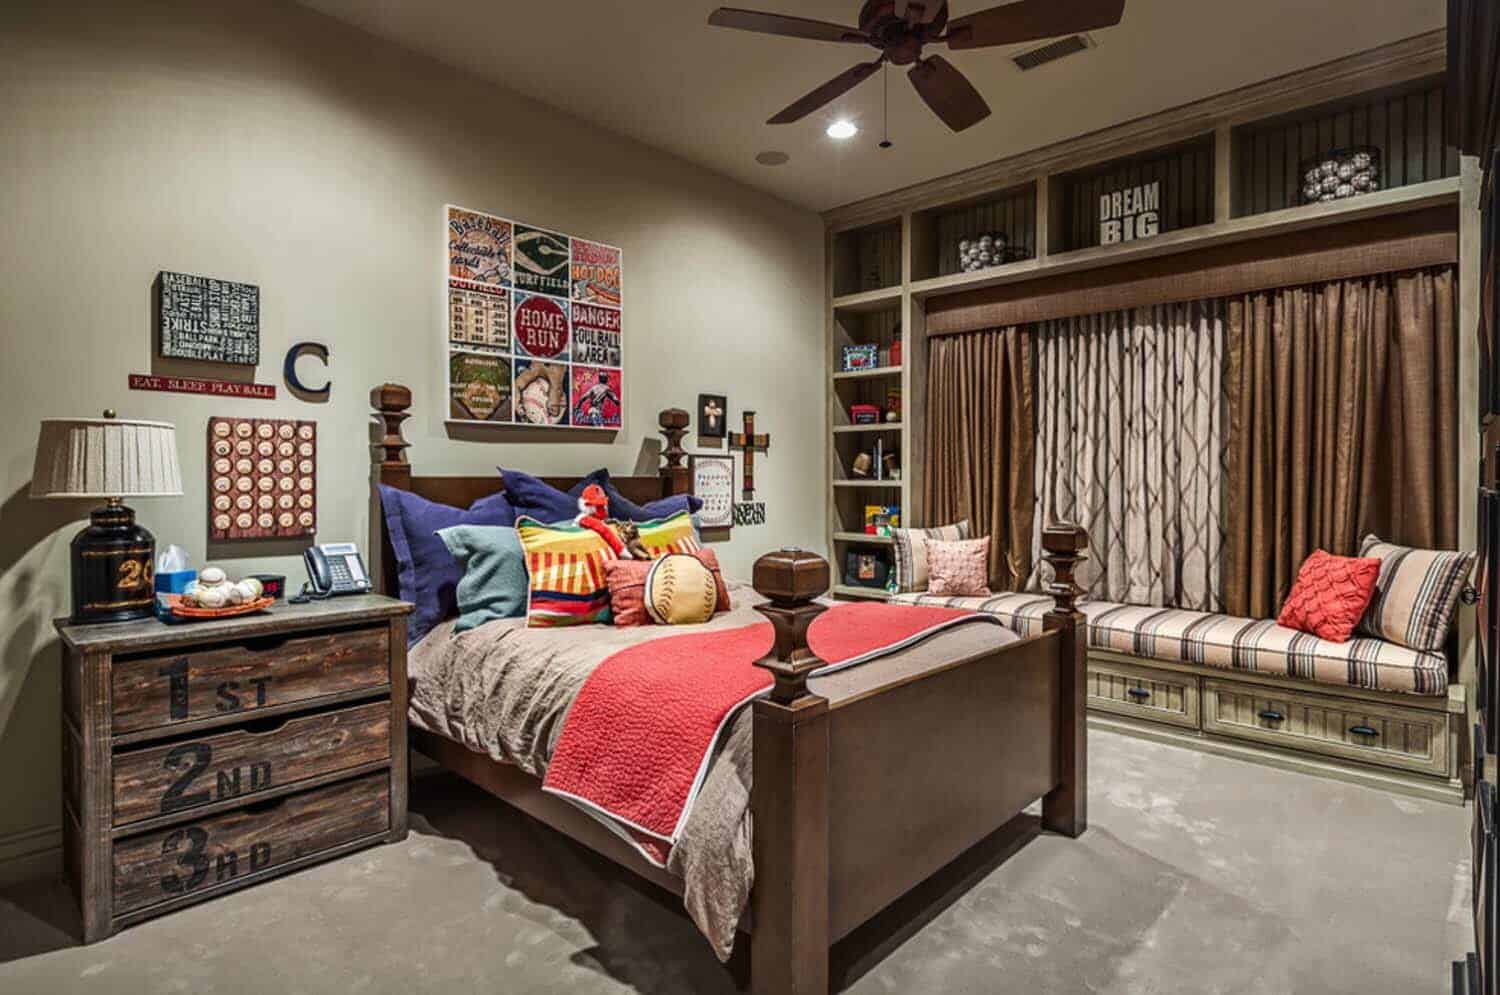 contemporary-kids-bedroom